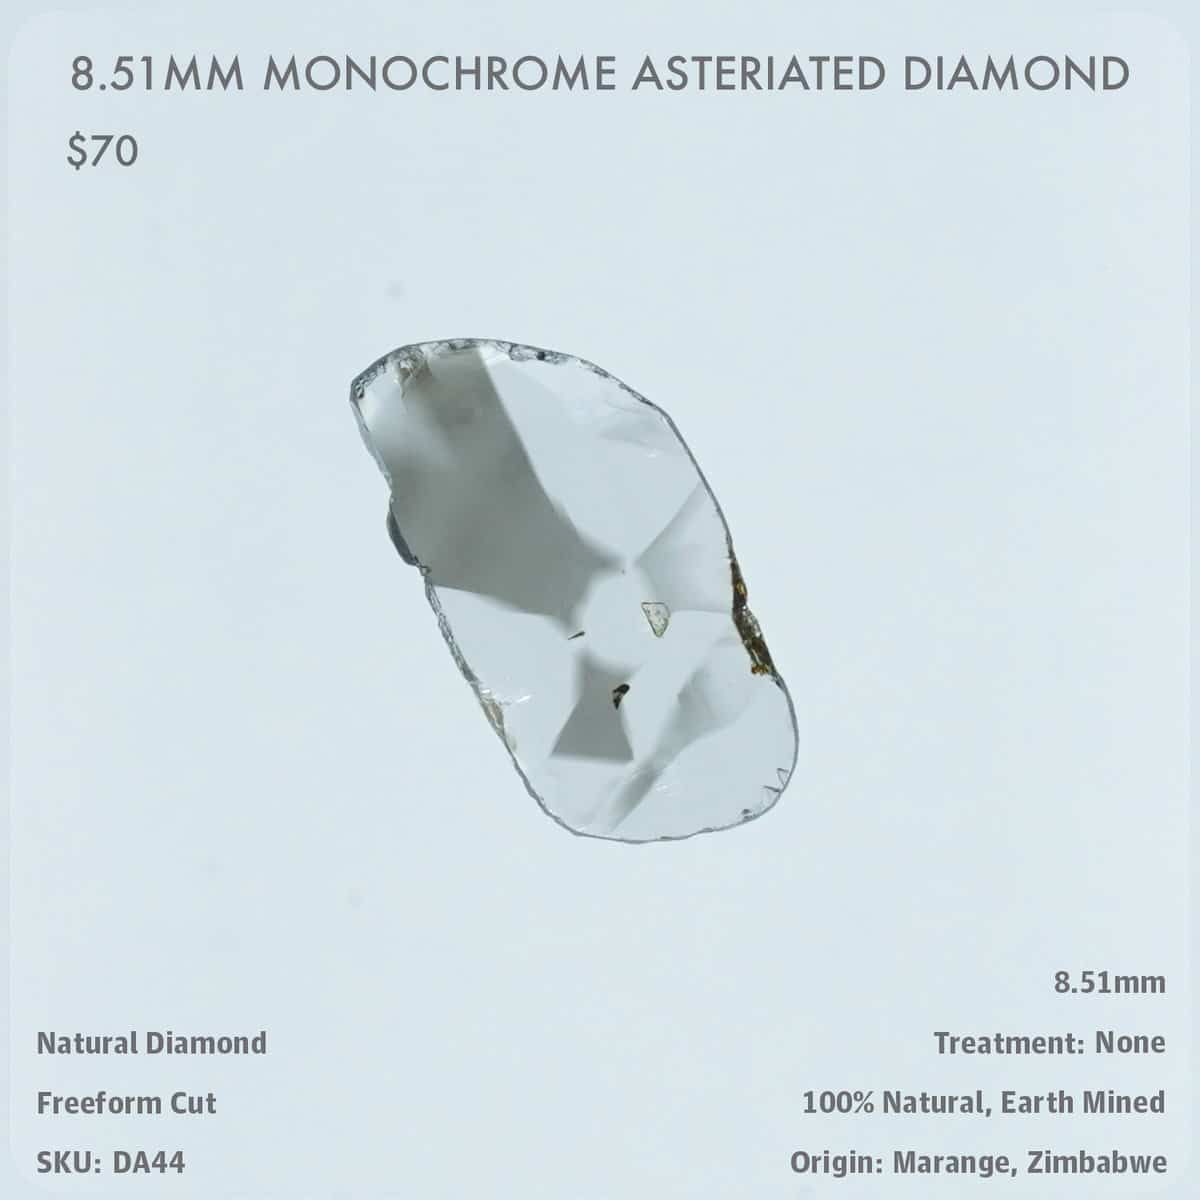 8.51mm Monochrome Asteriated Diamond